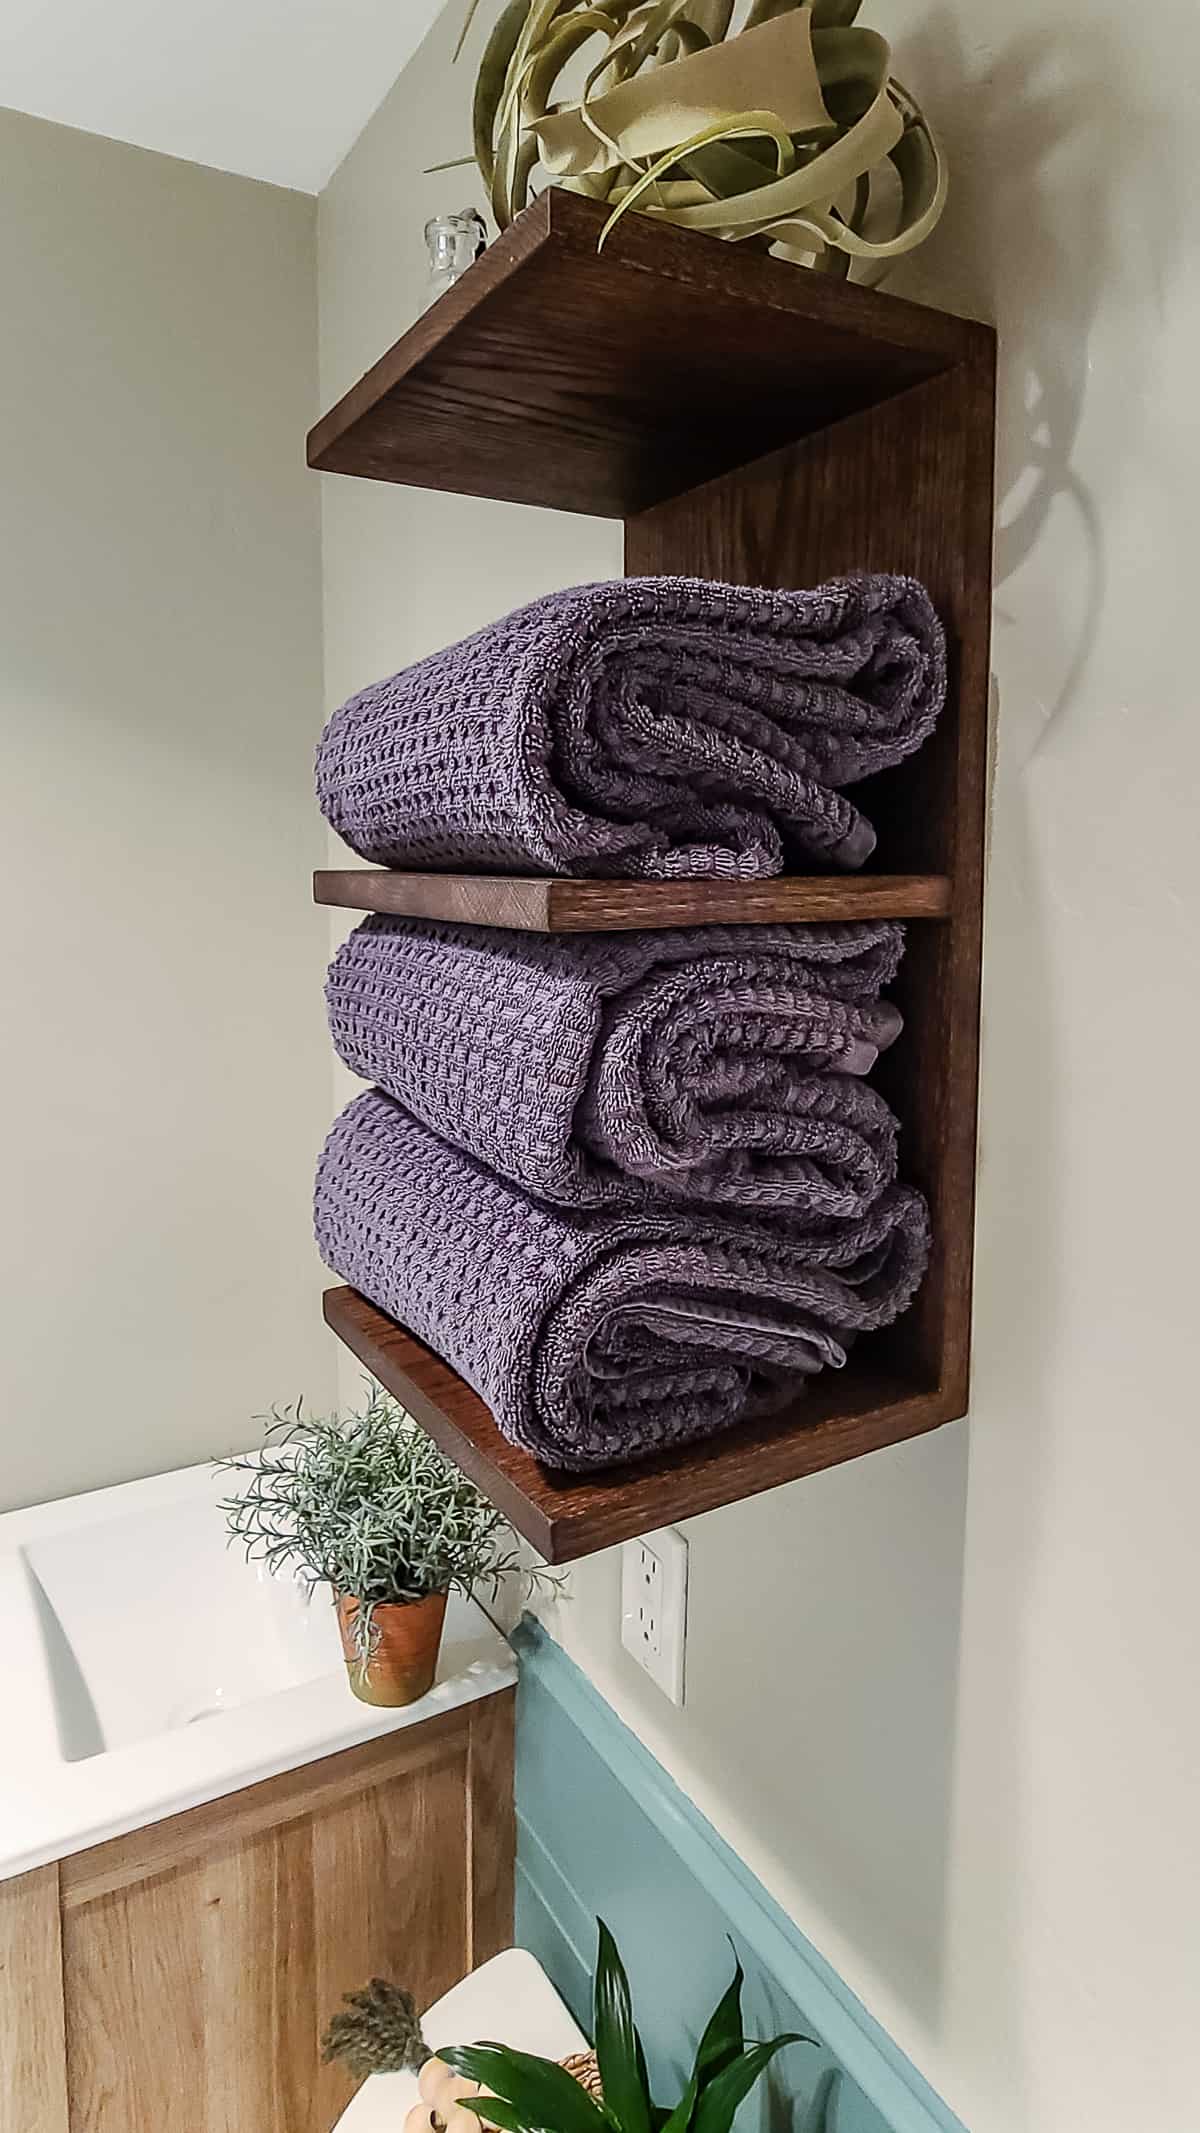 https://www.makingmanzanita.com/wp-content/uploads/2022/07/wooden-towel-rack-in-bathroom-hanging-on-wall-above-the-toilet.jpg